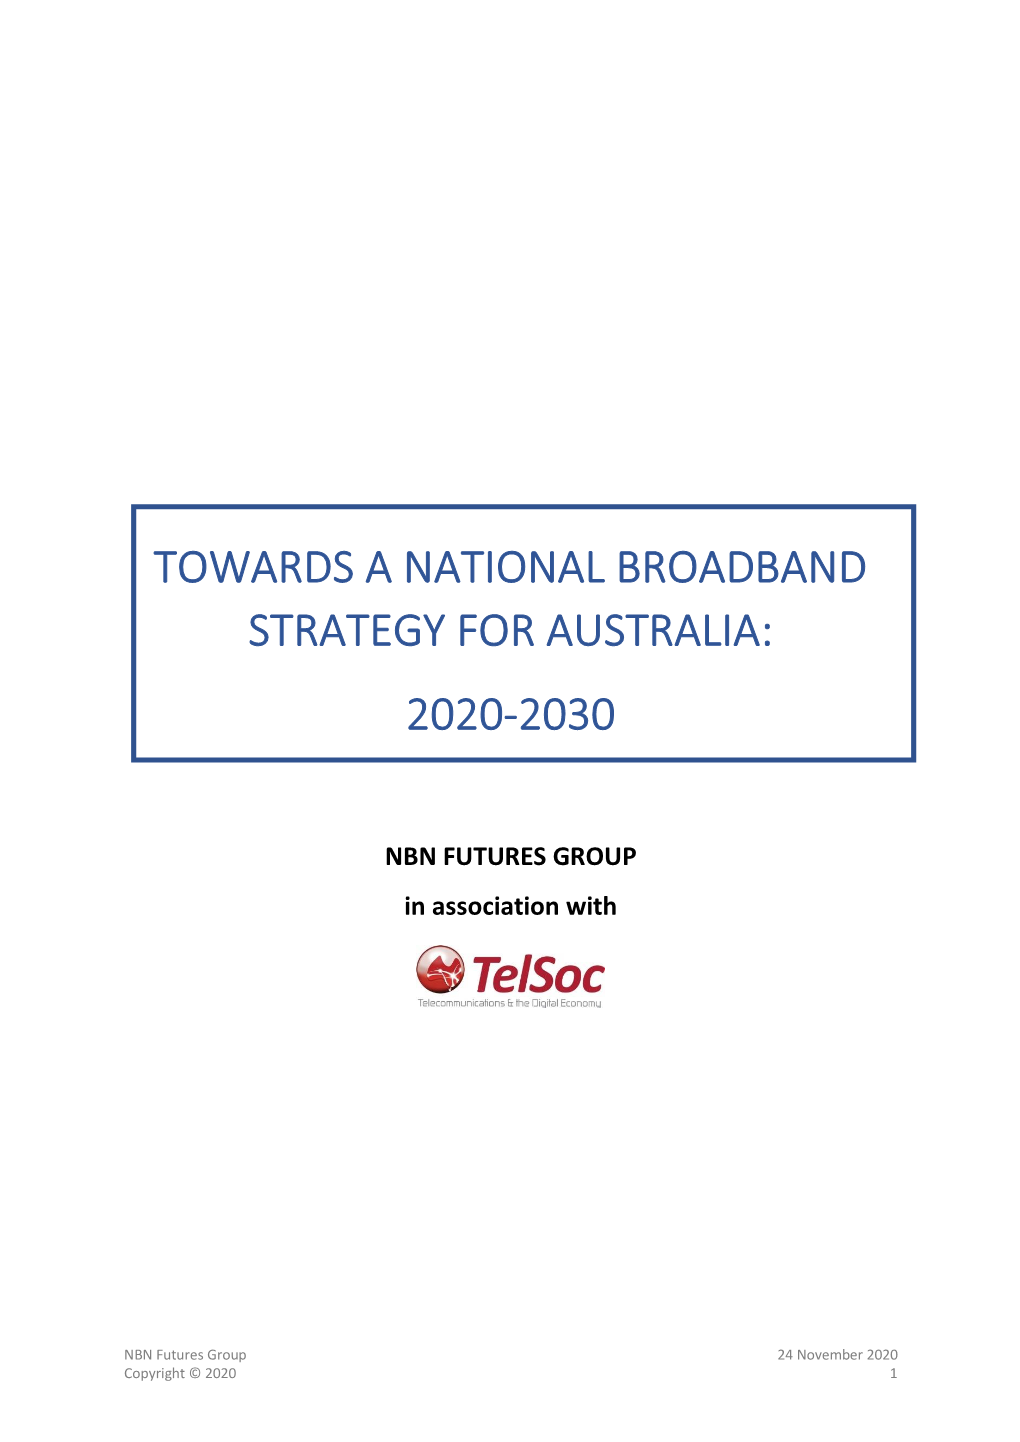 Towards a National Broadband Strategy for Australia: 2020-2030